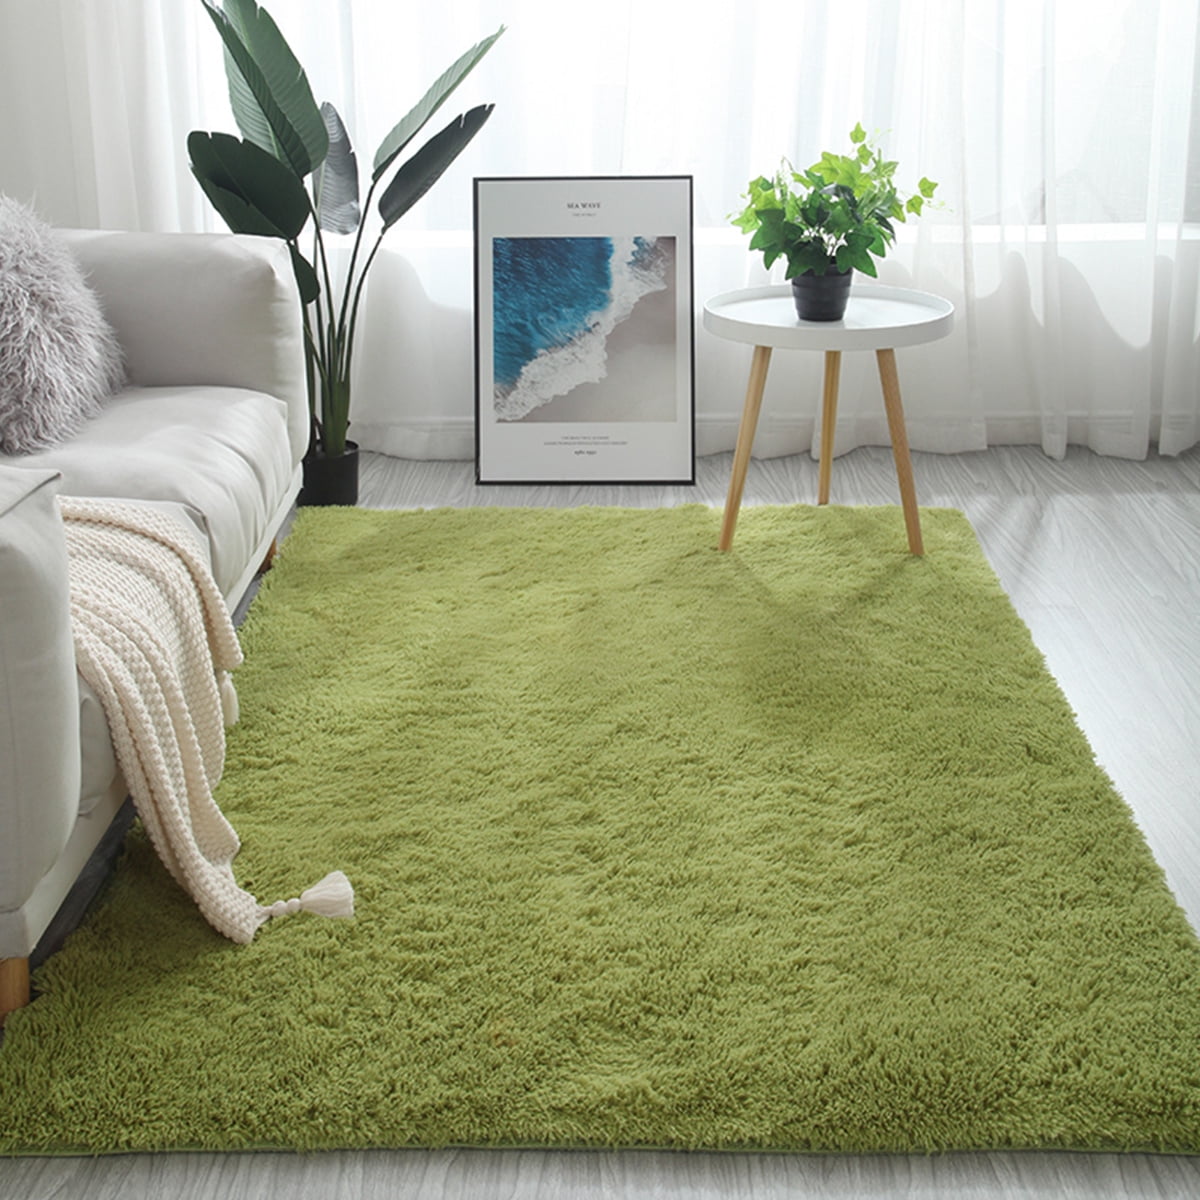 Area Rugs Green Glass Non-Slip Floor Mat Living Room Bedroom Carpets Doormats Home Decor 31 x 20 inches